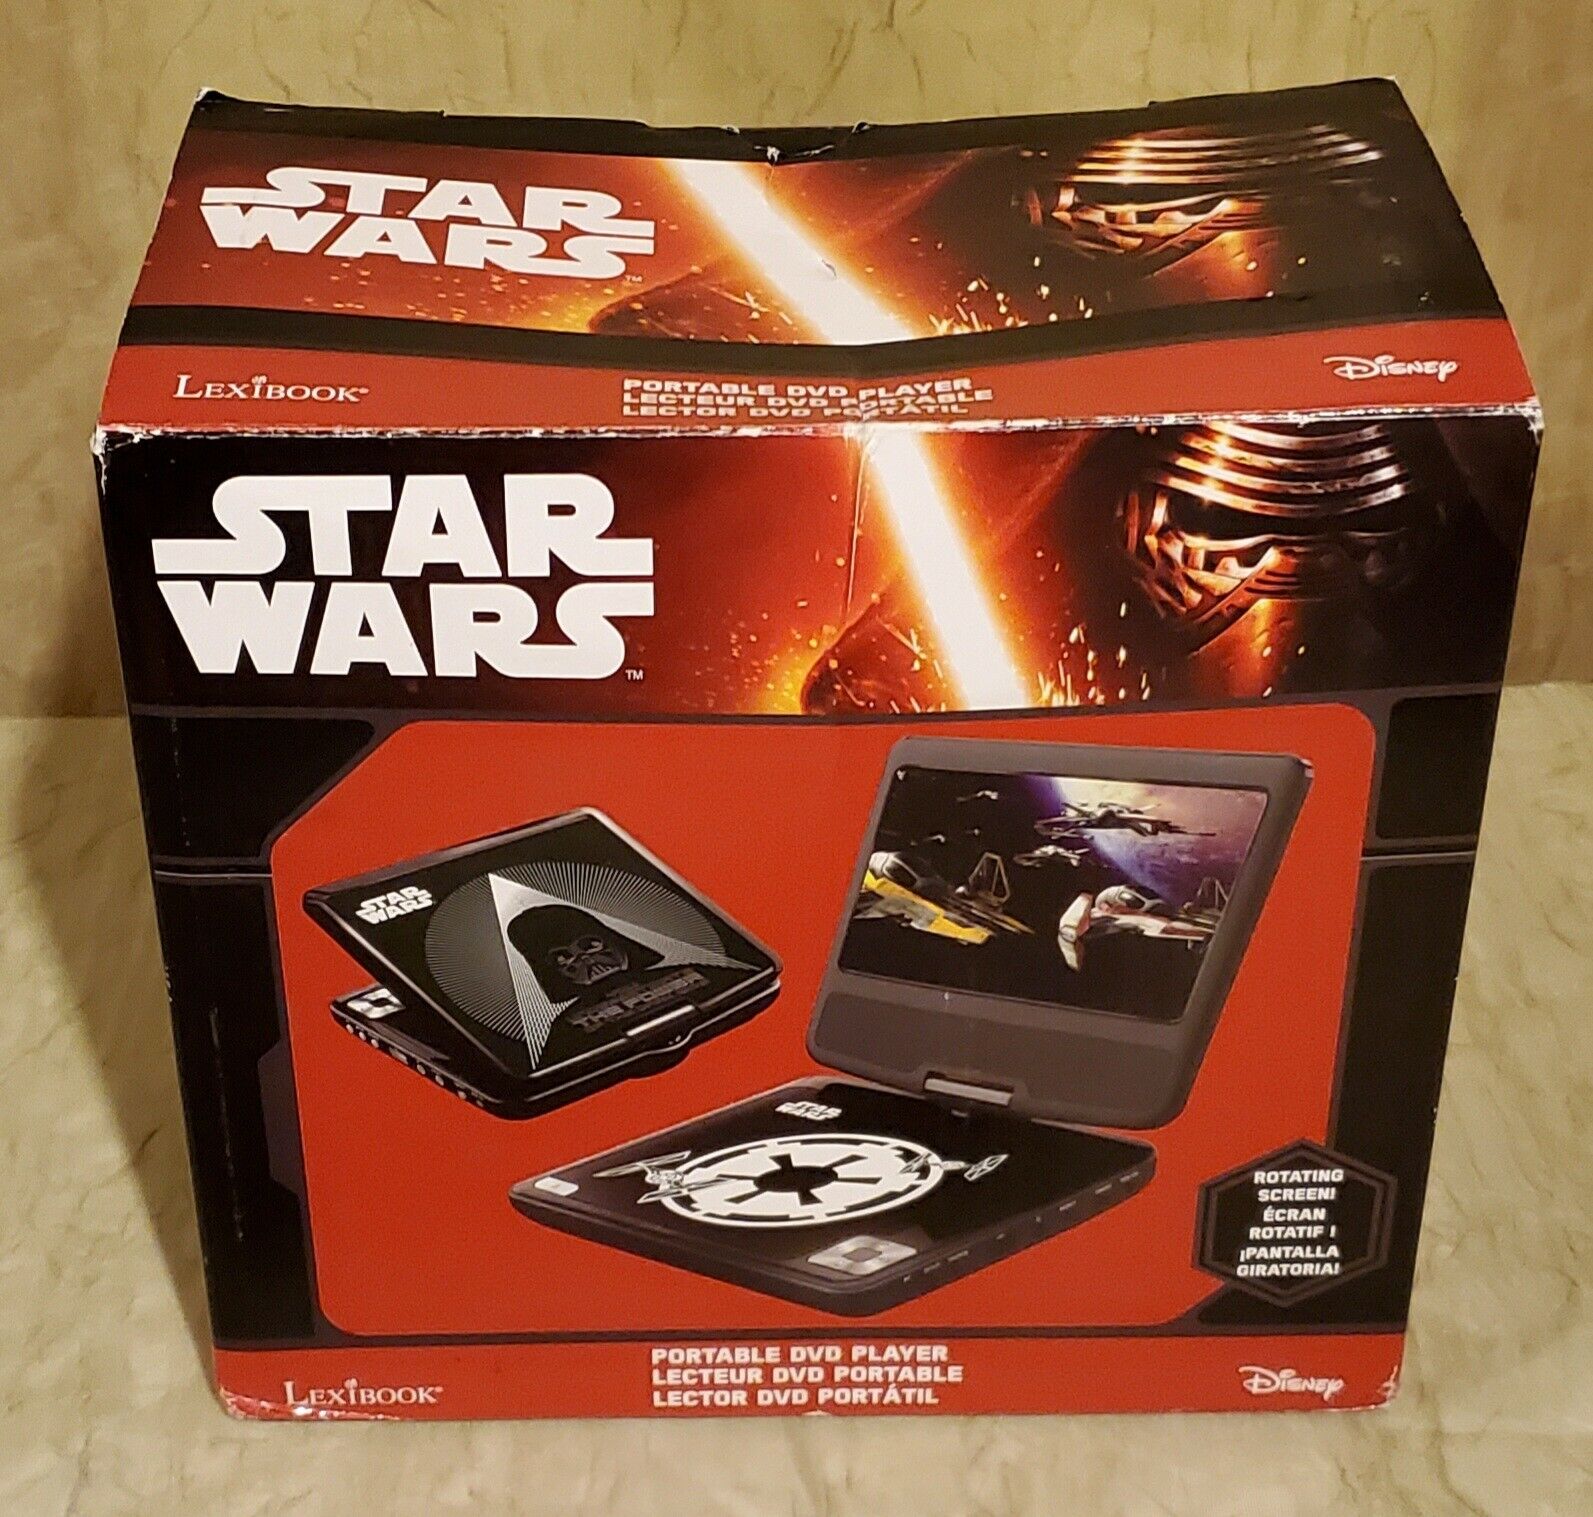 Lexibook Star Wars Portable DVD Player - Darth Vader - DVDP6SW - New Open Box